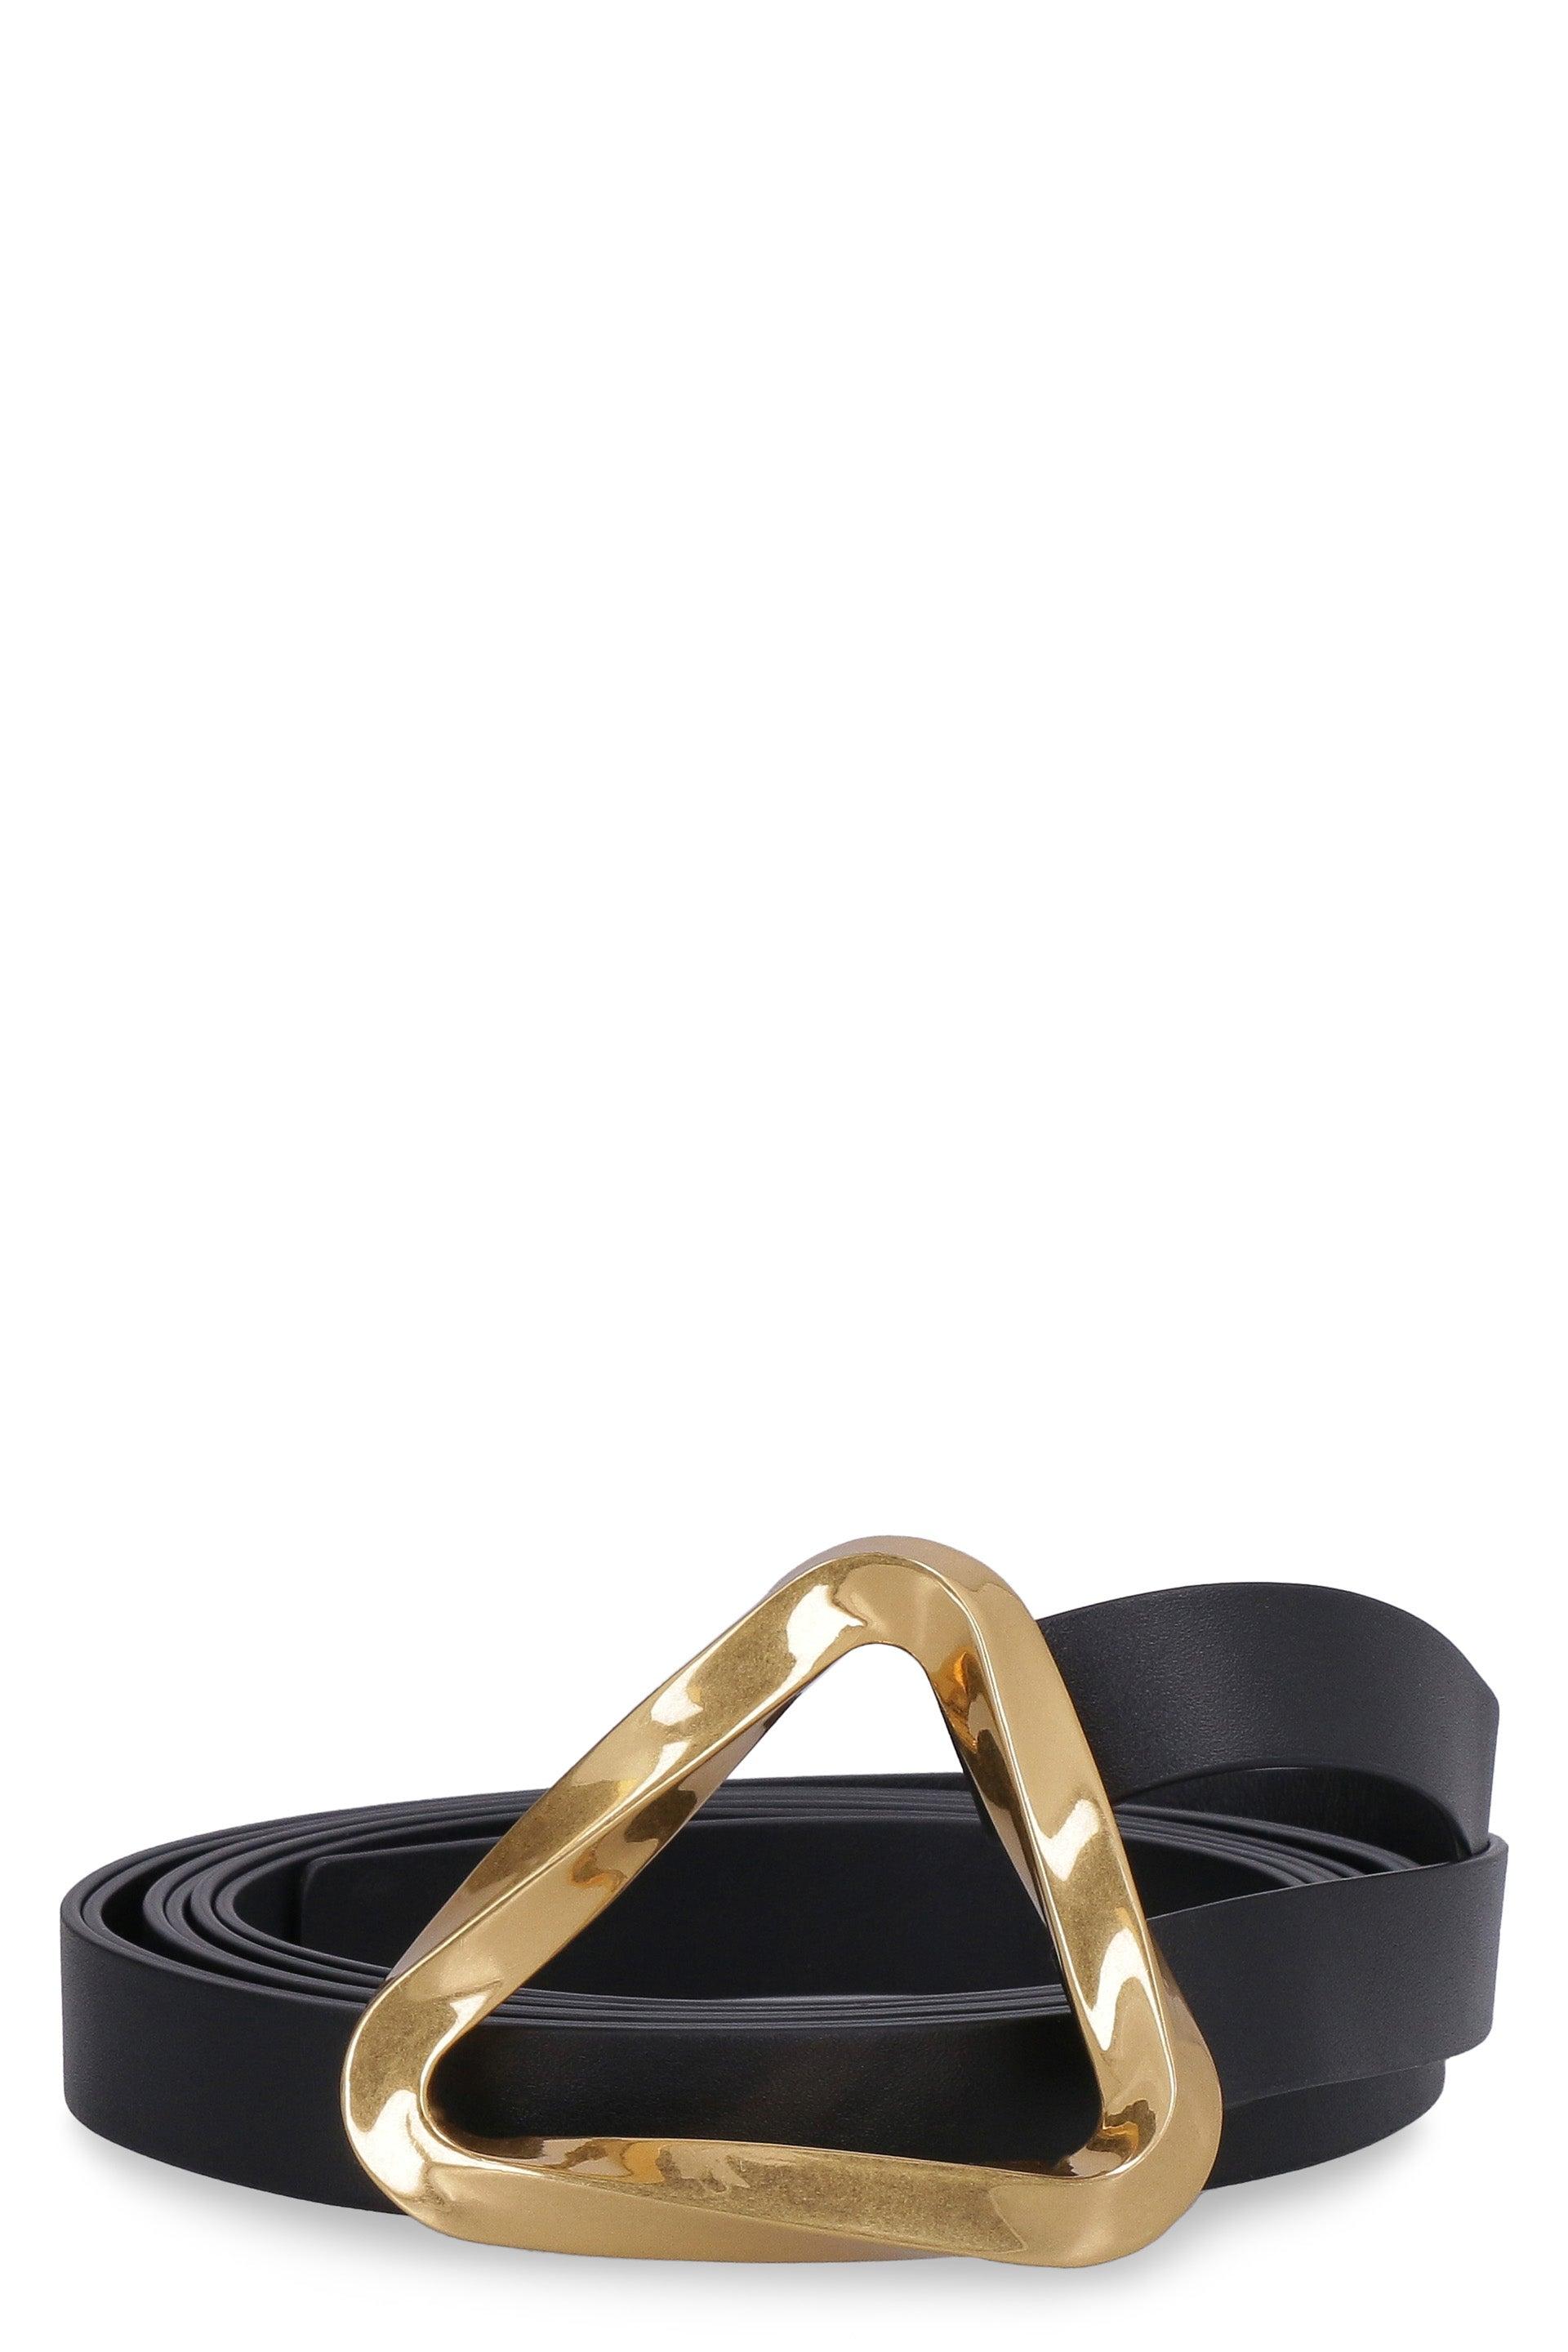 Bottega Veneta Grasp Leather Double Strap Belt in Black   Lyst